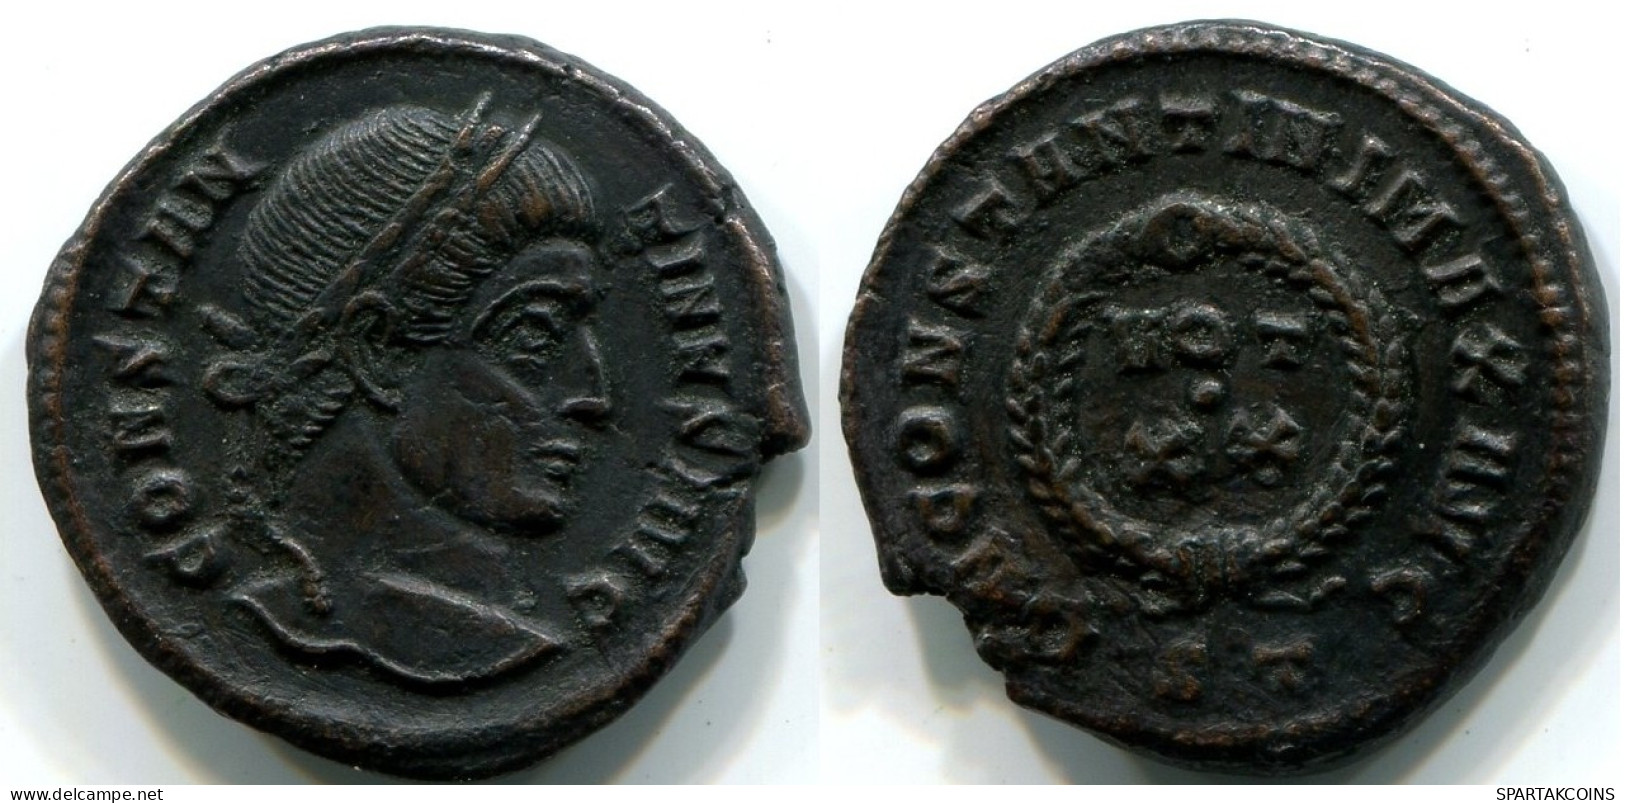 CONSTANTINE I Ticinum Mint ST AD 320-321 D N CONSTANTINI MAX AVG #ANC12447.16.E.A - The Christian Empire (307 AD To 363 AD)